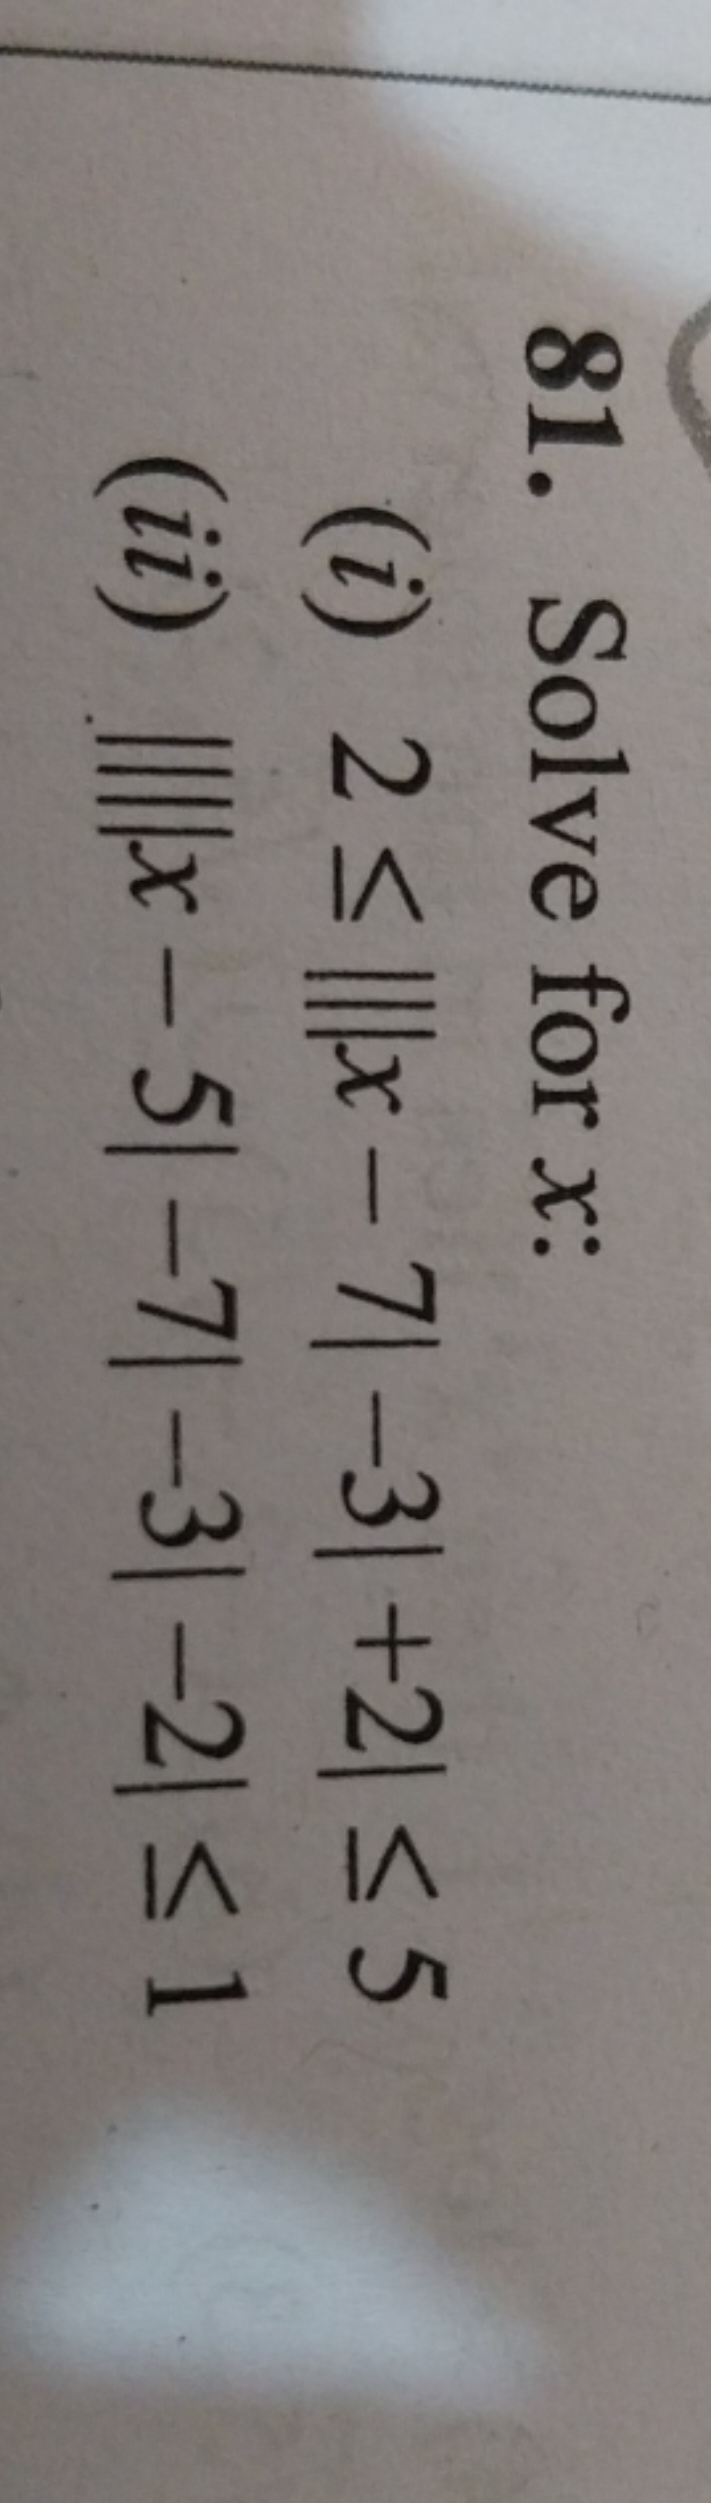 81. Solve for x :
(i) 2≤∣∣∣x−7∣−3∣+2∣≤5
(ii) ||||x−5∣−7∣−3∣−2∣≤1
